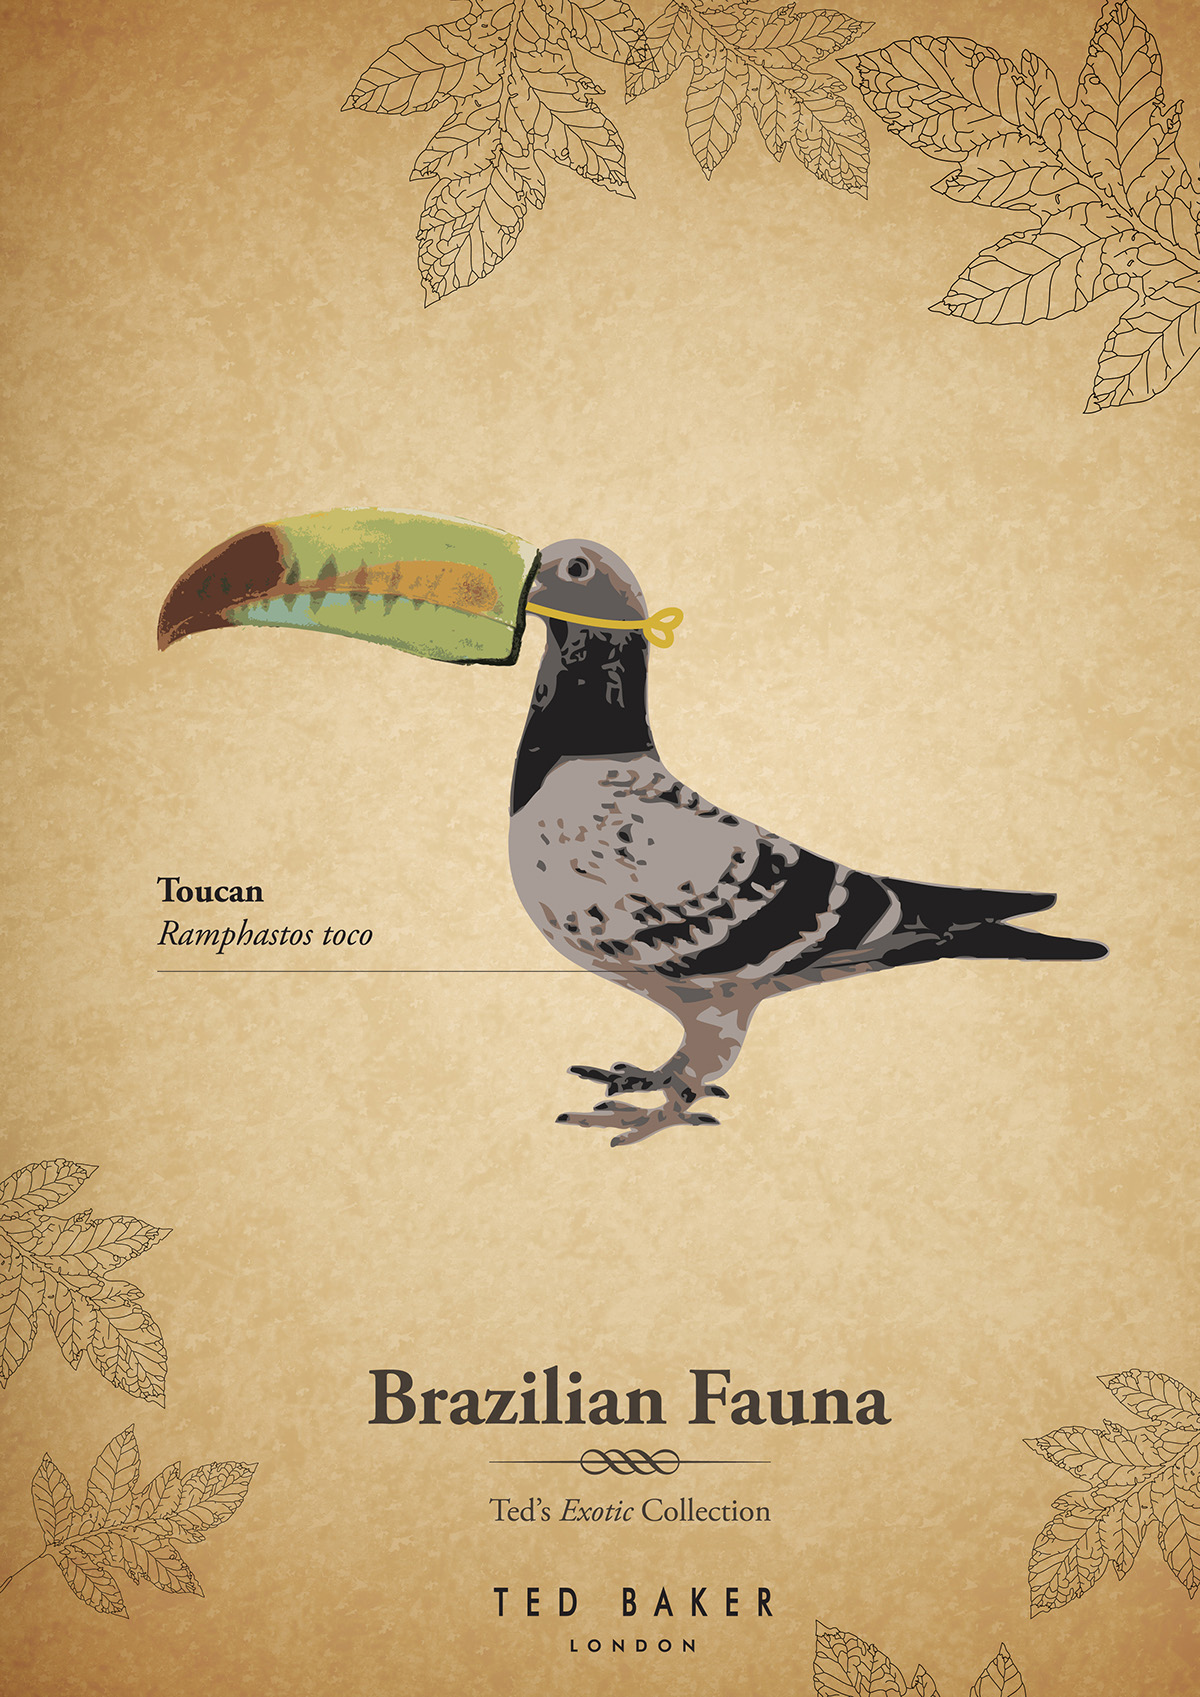 Ted Baker D&AD Brazil poster fauna animals toucan bear adevrtising bus stop exotic wildlife funny cartoon